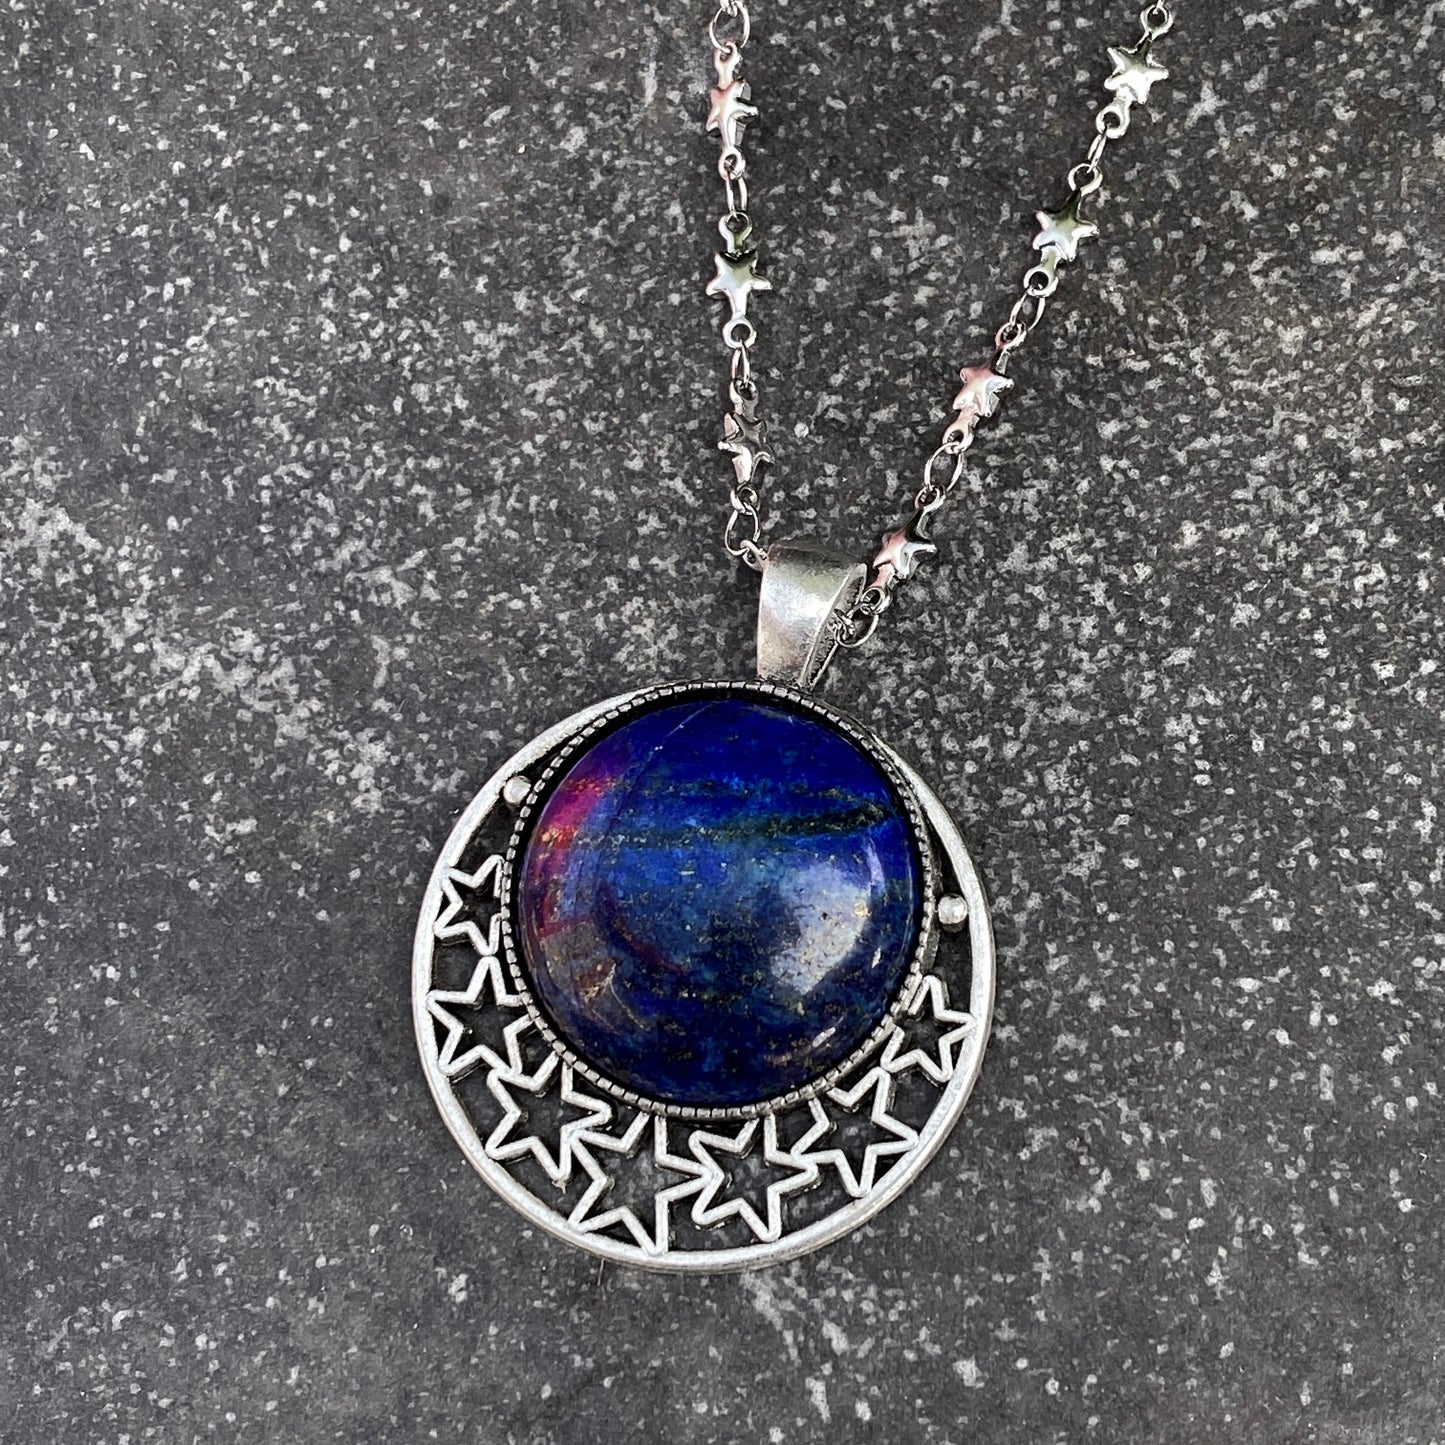 Lapis Lazuli gemsotne pendant Necklace on steel chain.